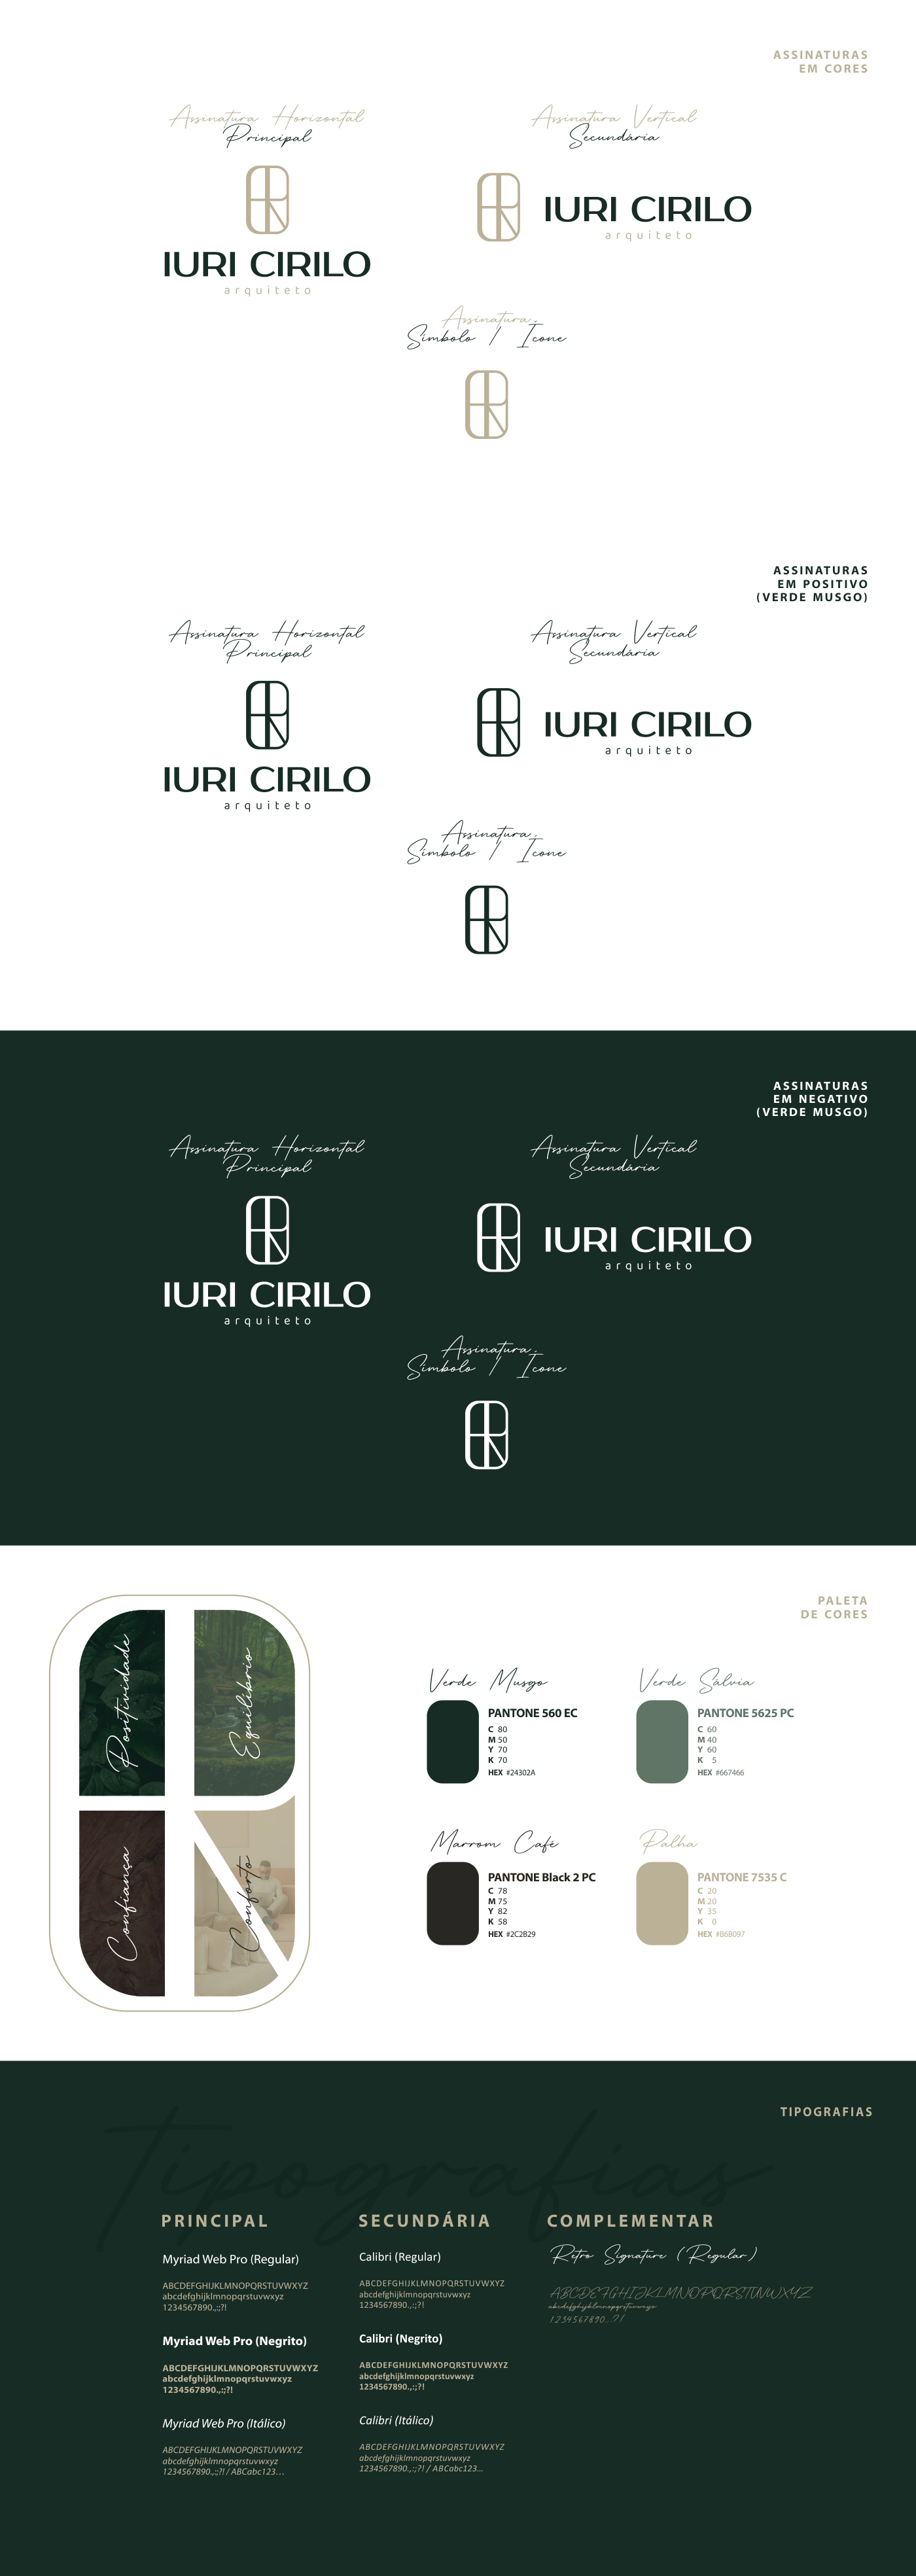 architecture ARQUITETURA branding  design gráfico identidade visual Logotipo marca